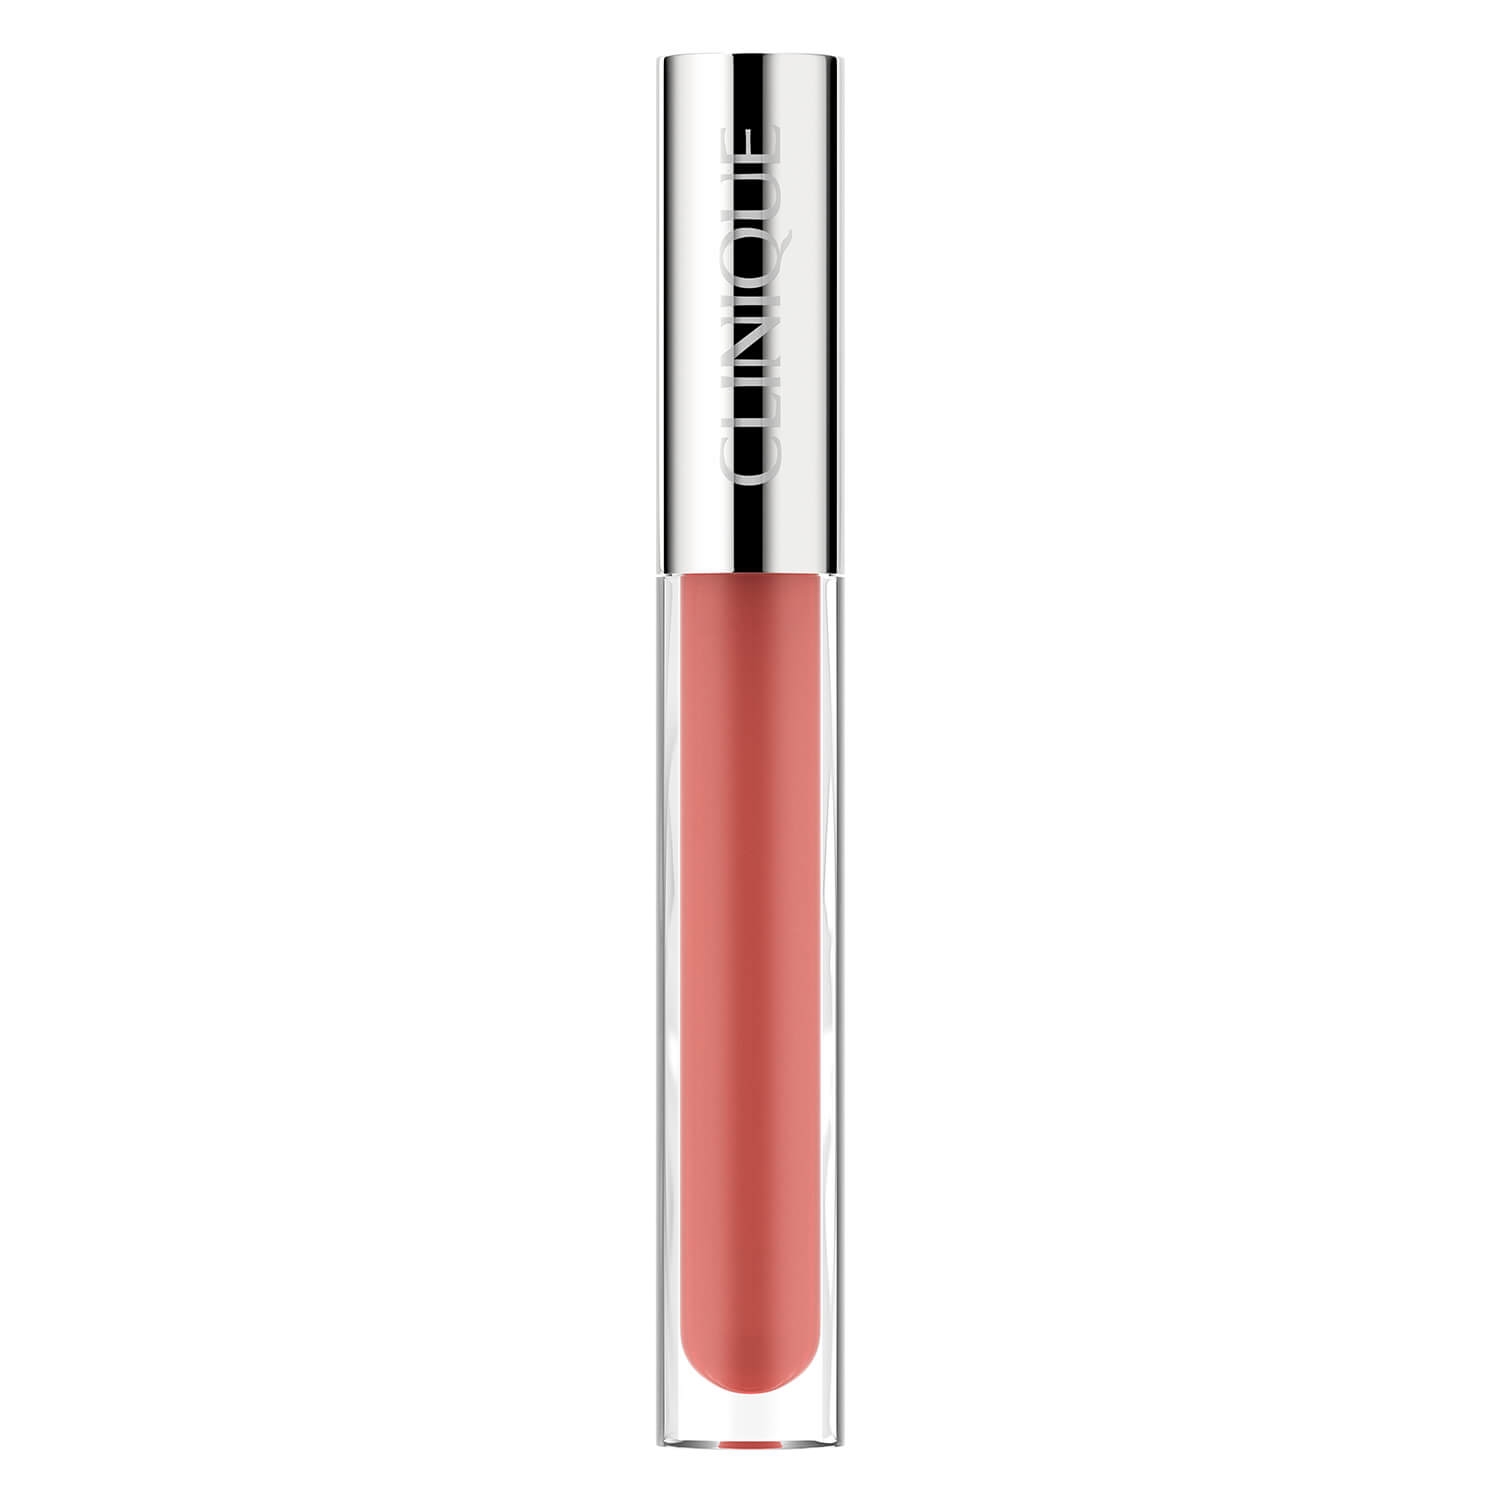 Produktbild von Clinique Lips - Pop Plush Creamy Lip Gloss 02 Chiffon Pop